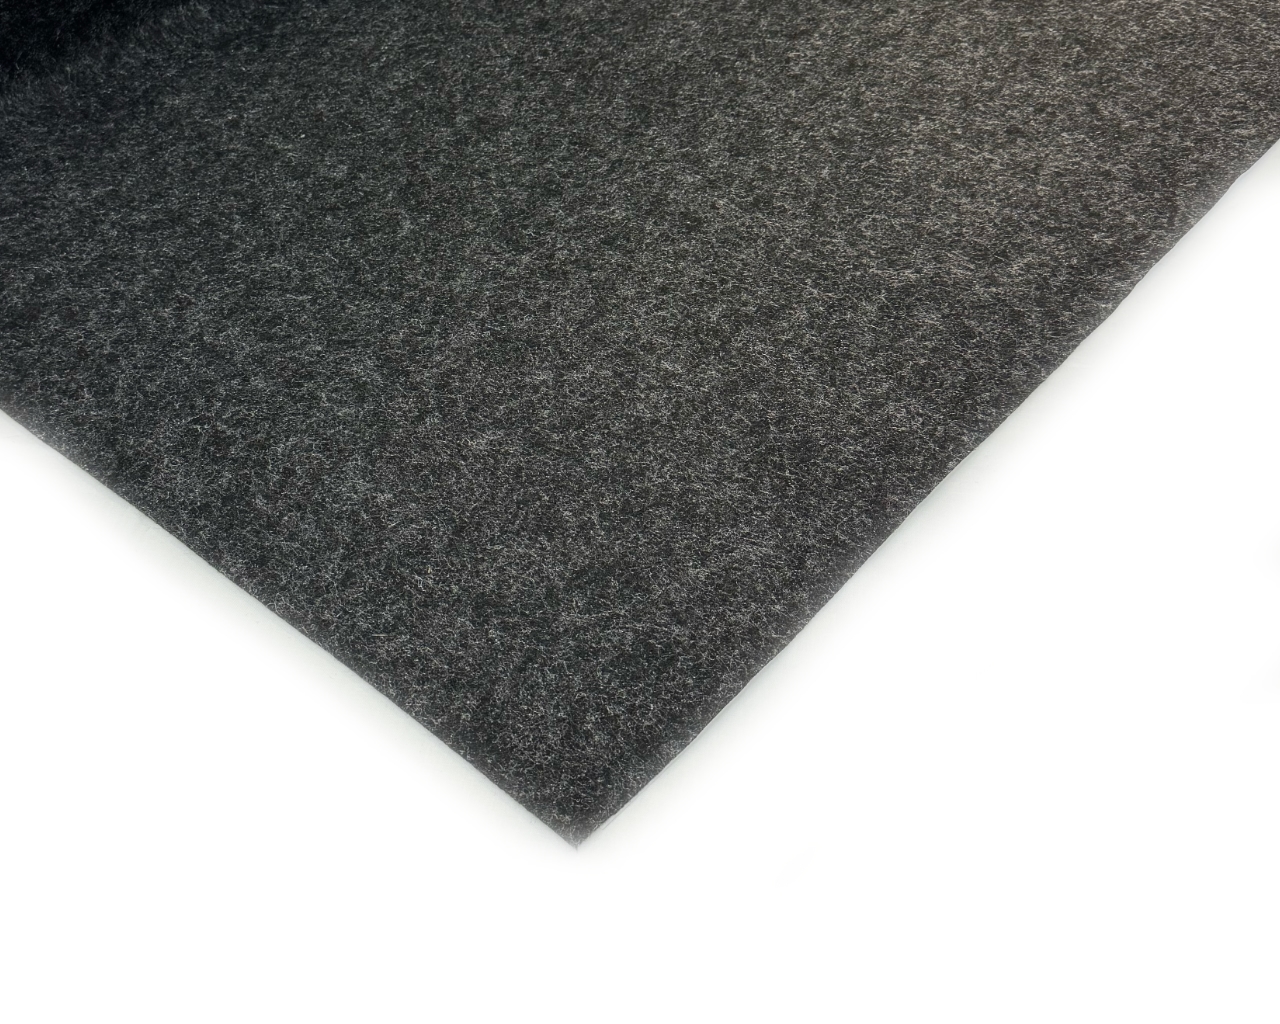 STP Acoustic Carpet anthrazit 1,40x10m - selbstklebender Bezugsstoff